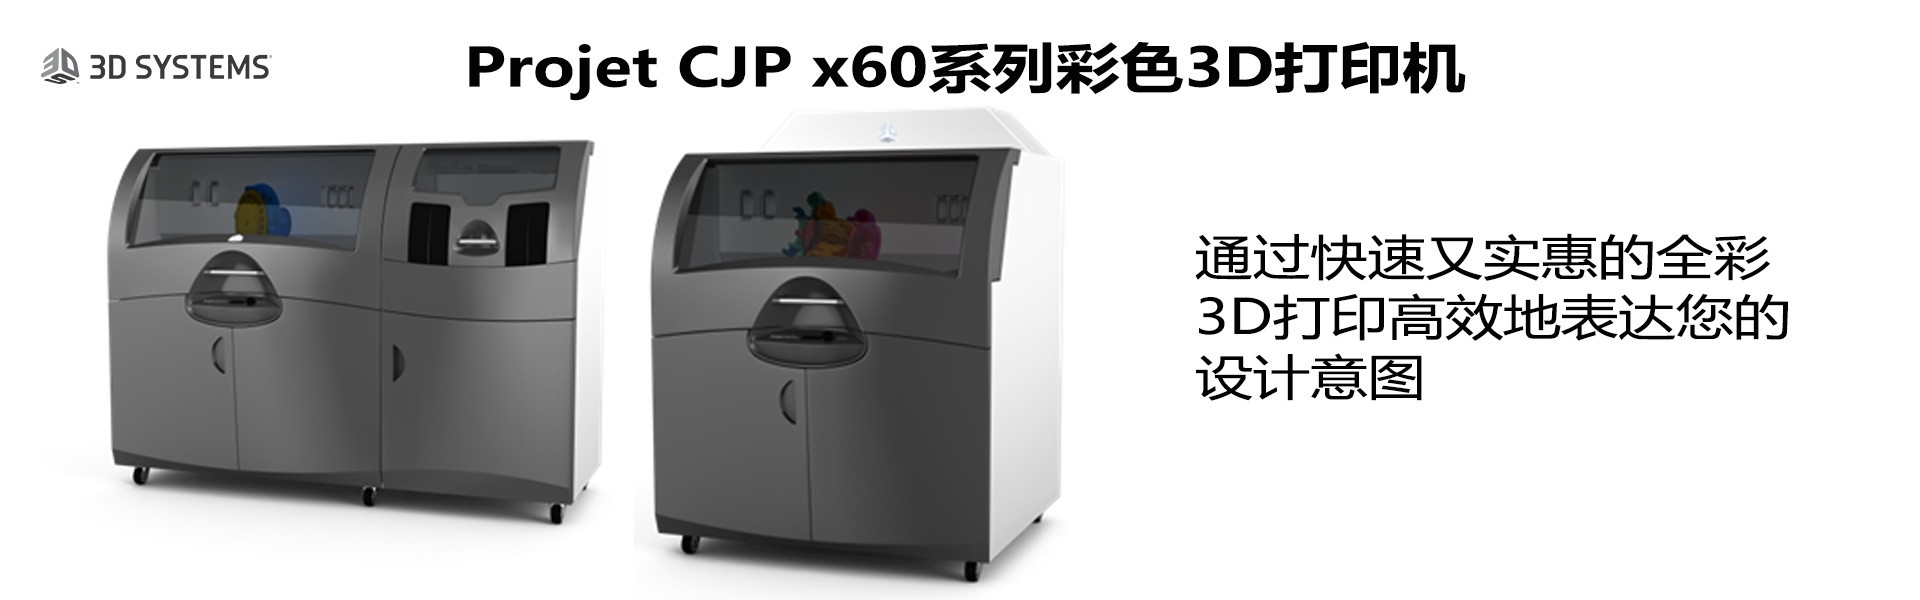 ProJet CJP 660Pro 全彩3D打印機